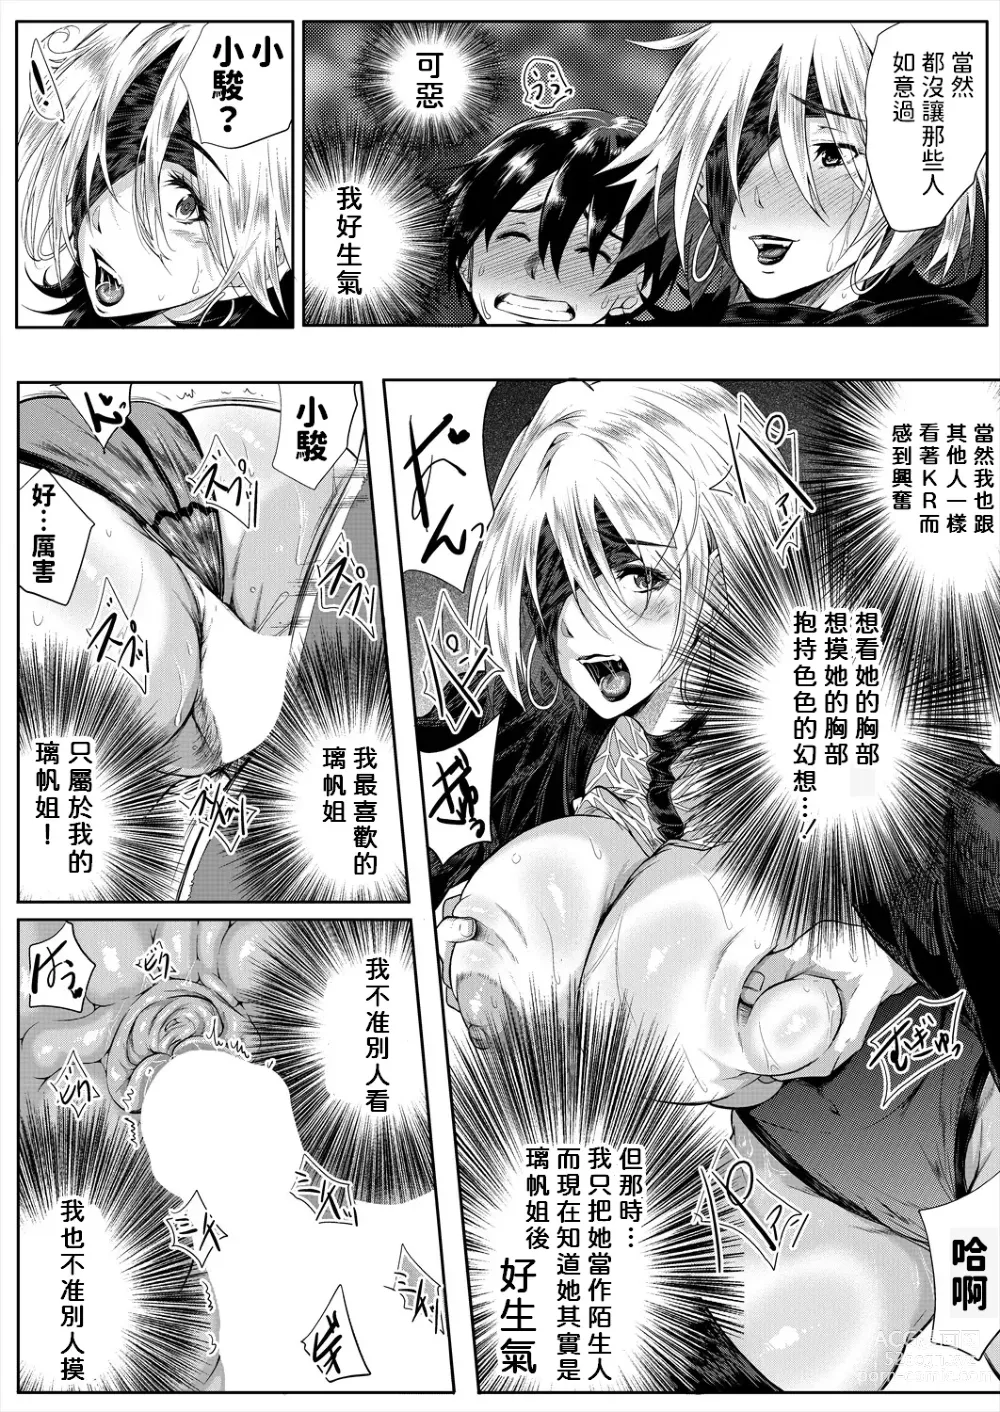 Page 45 of manga Strawberry Mermaid 2nd Dive